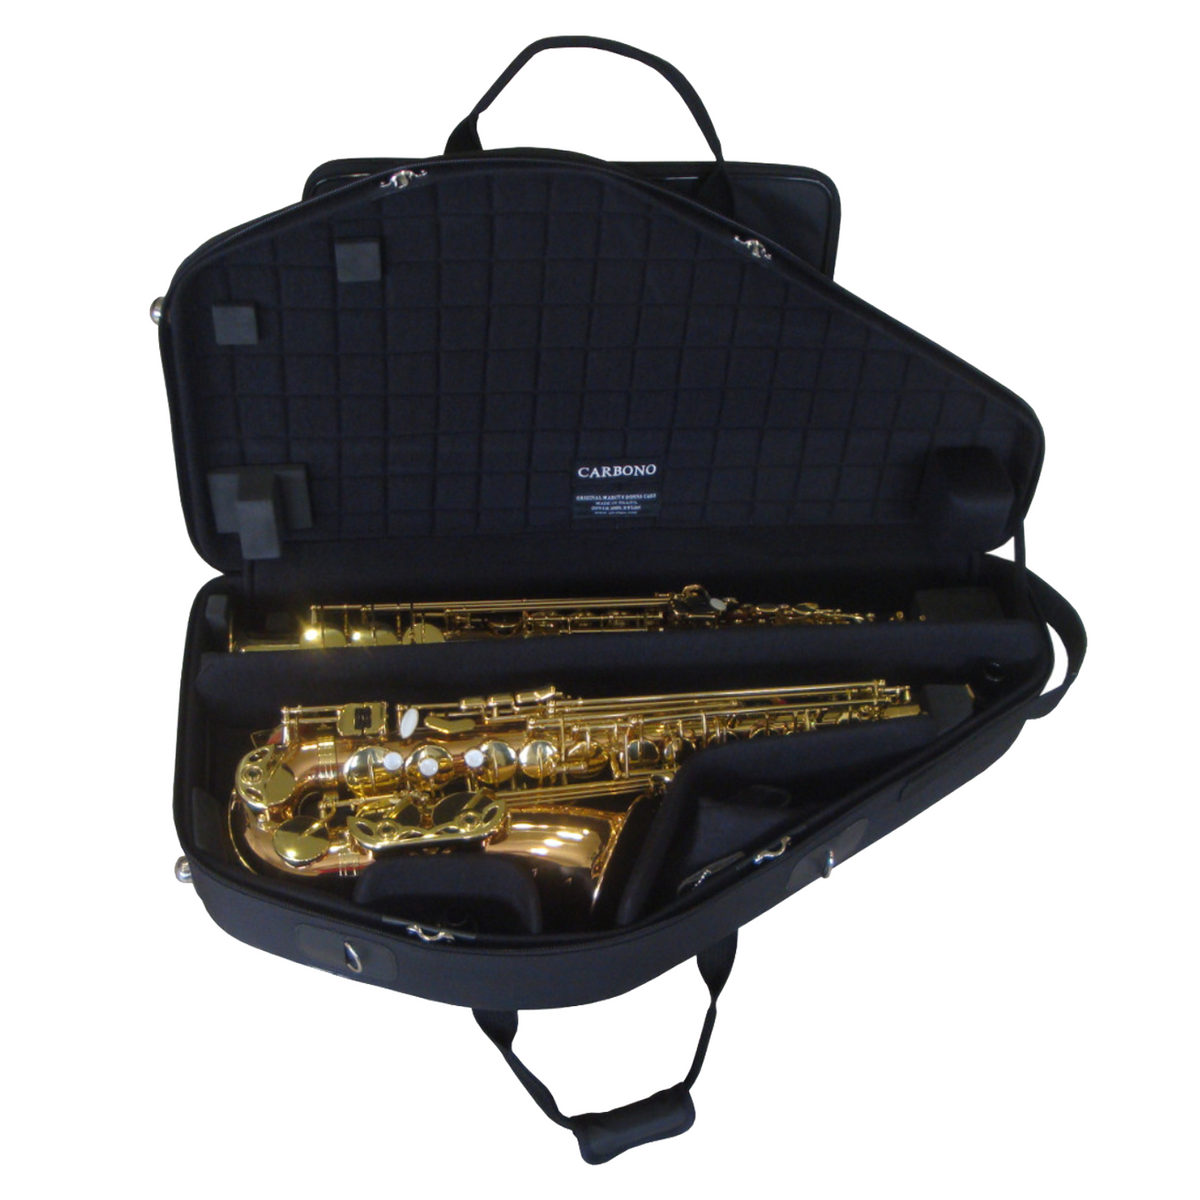 Marcus Bonna - Nylon Double Case for Alto and Curved Neck Soprano Saxophone-Case-Marcus Bonna-Music Elements